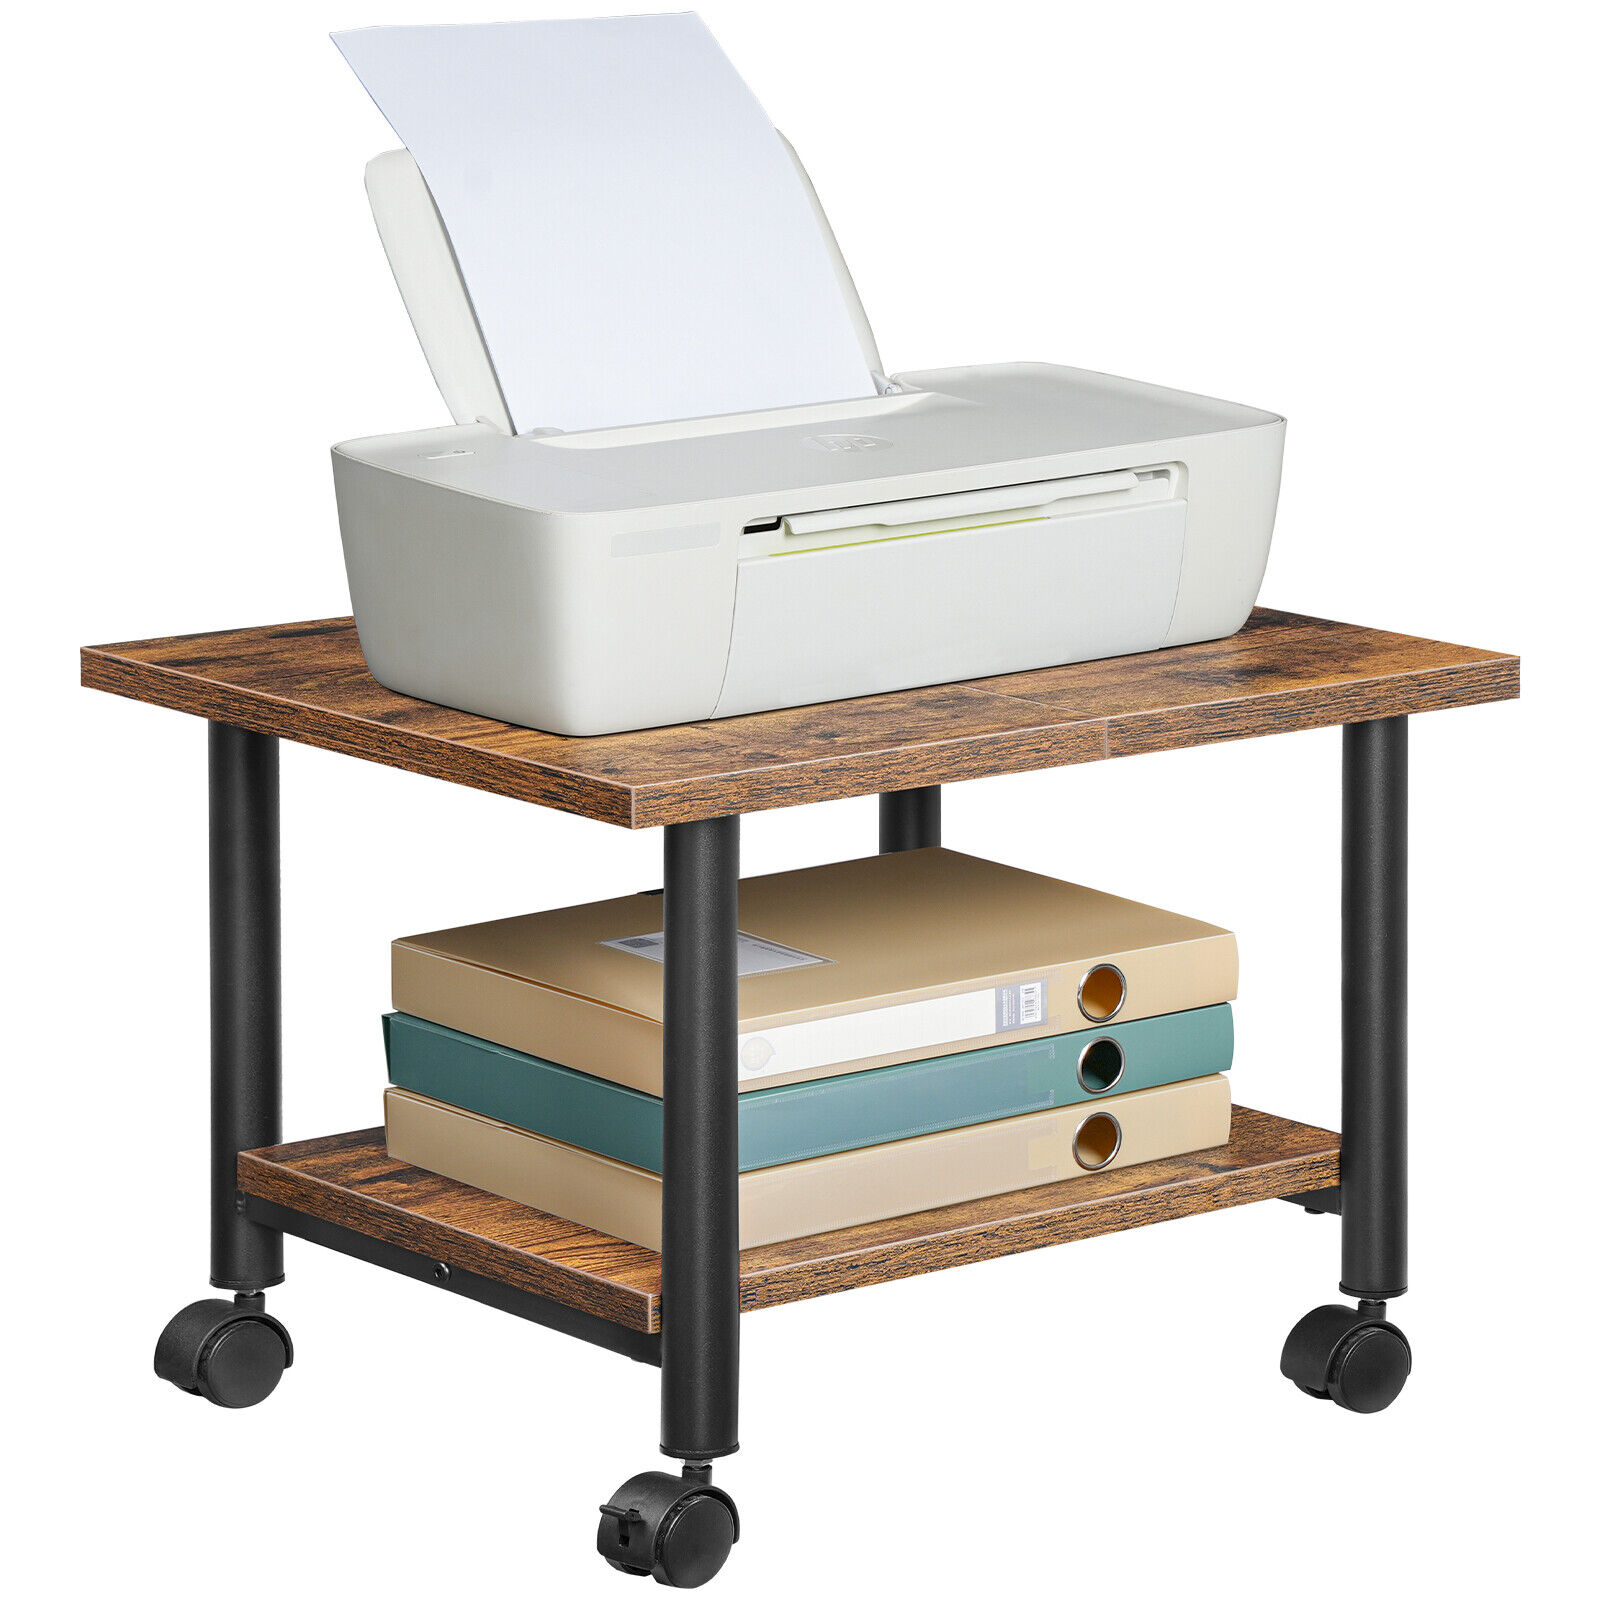 Mobile Printer Stand Table Scaner Rolling Cart Storage Organizer Rack Office